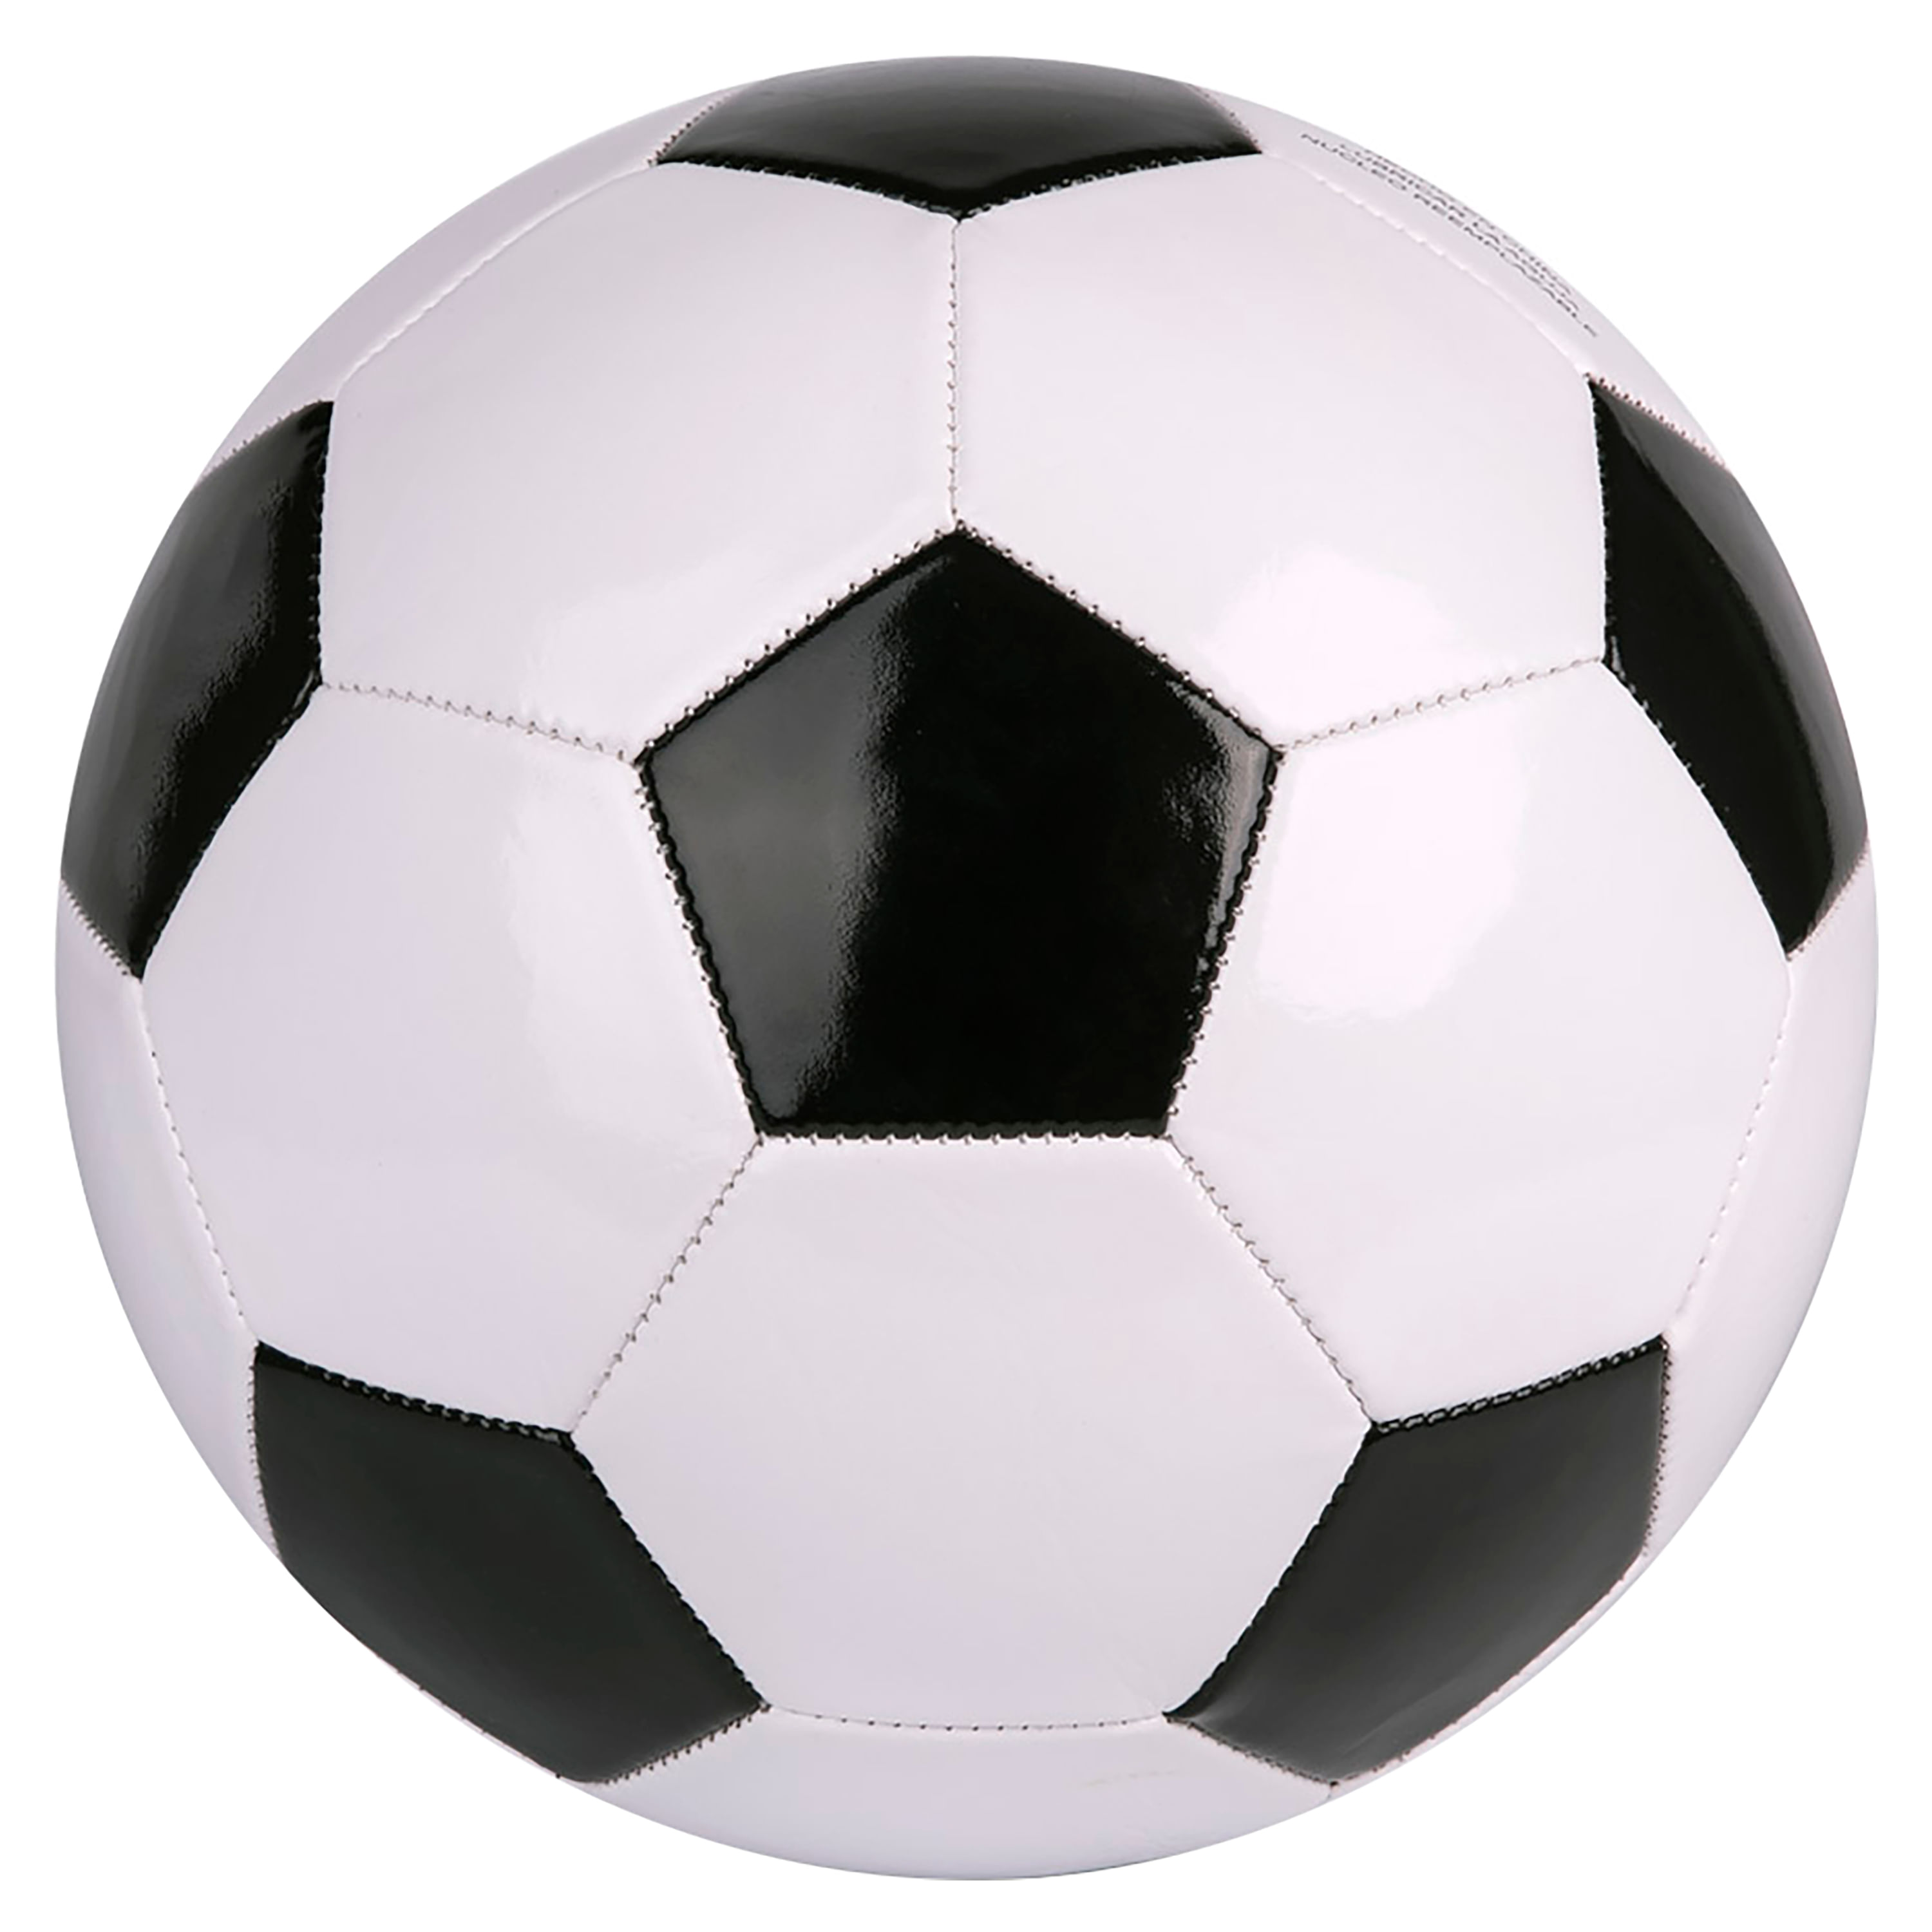 Balones de Fútbol, Pelotas Fútbol